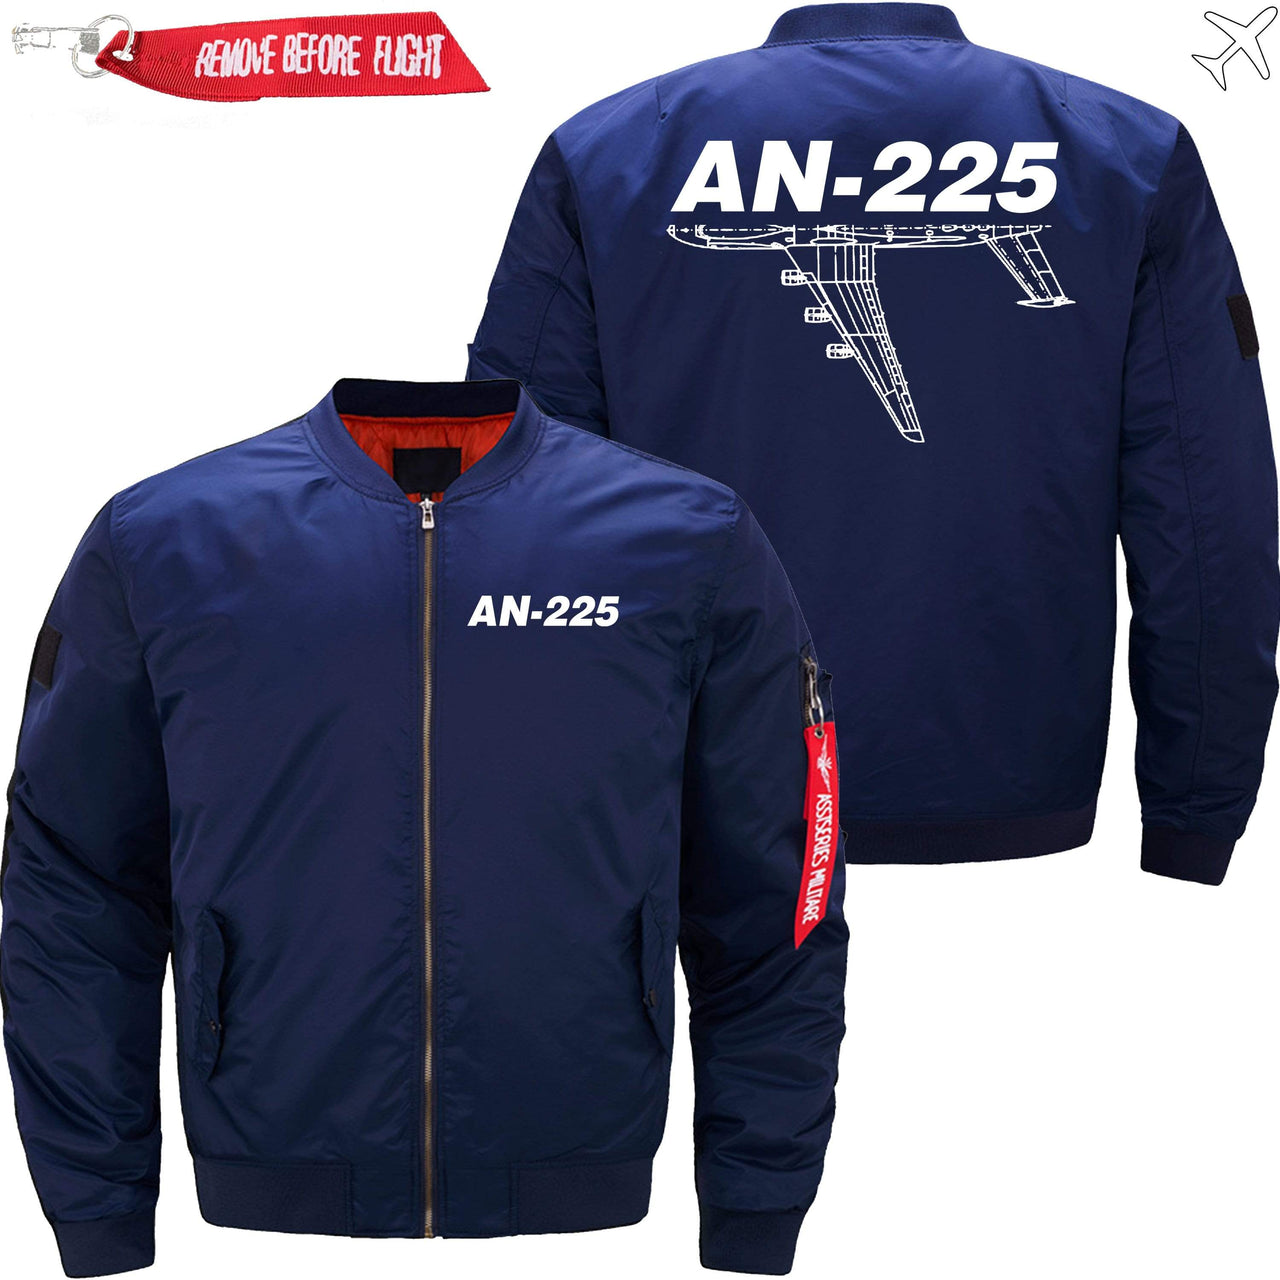 ANTONOV AN-225 - JACKET THE AV8R